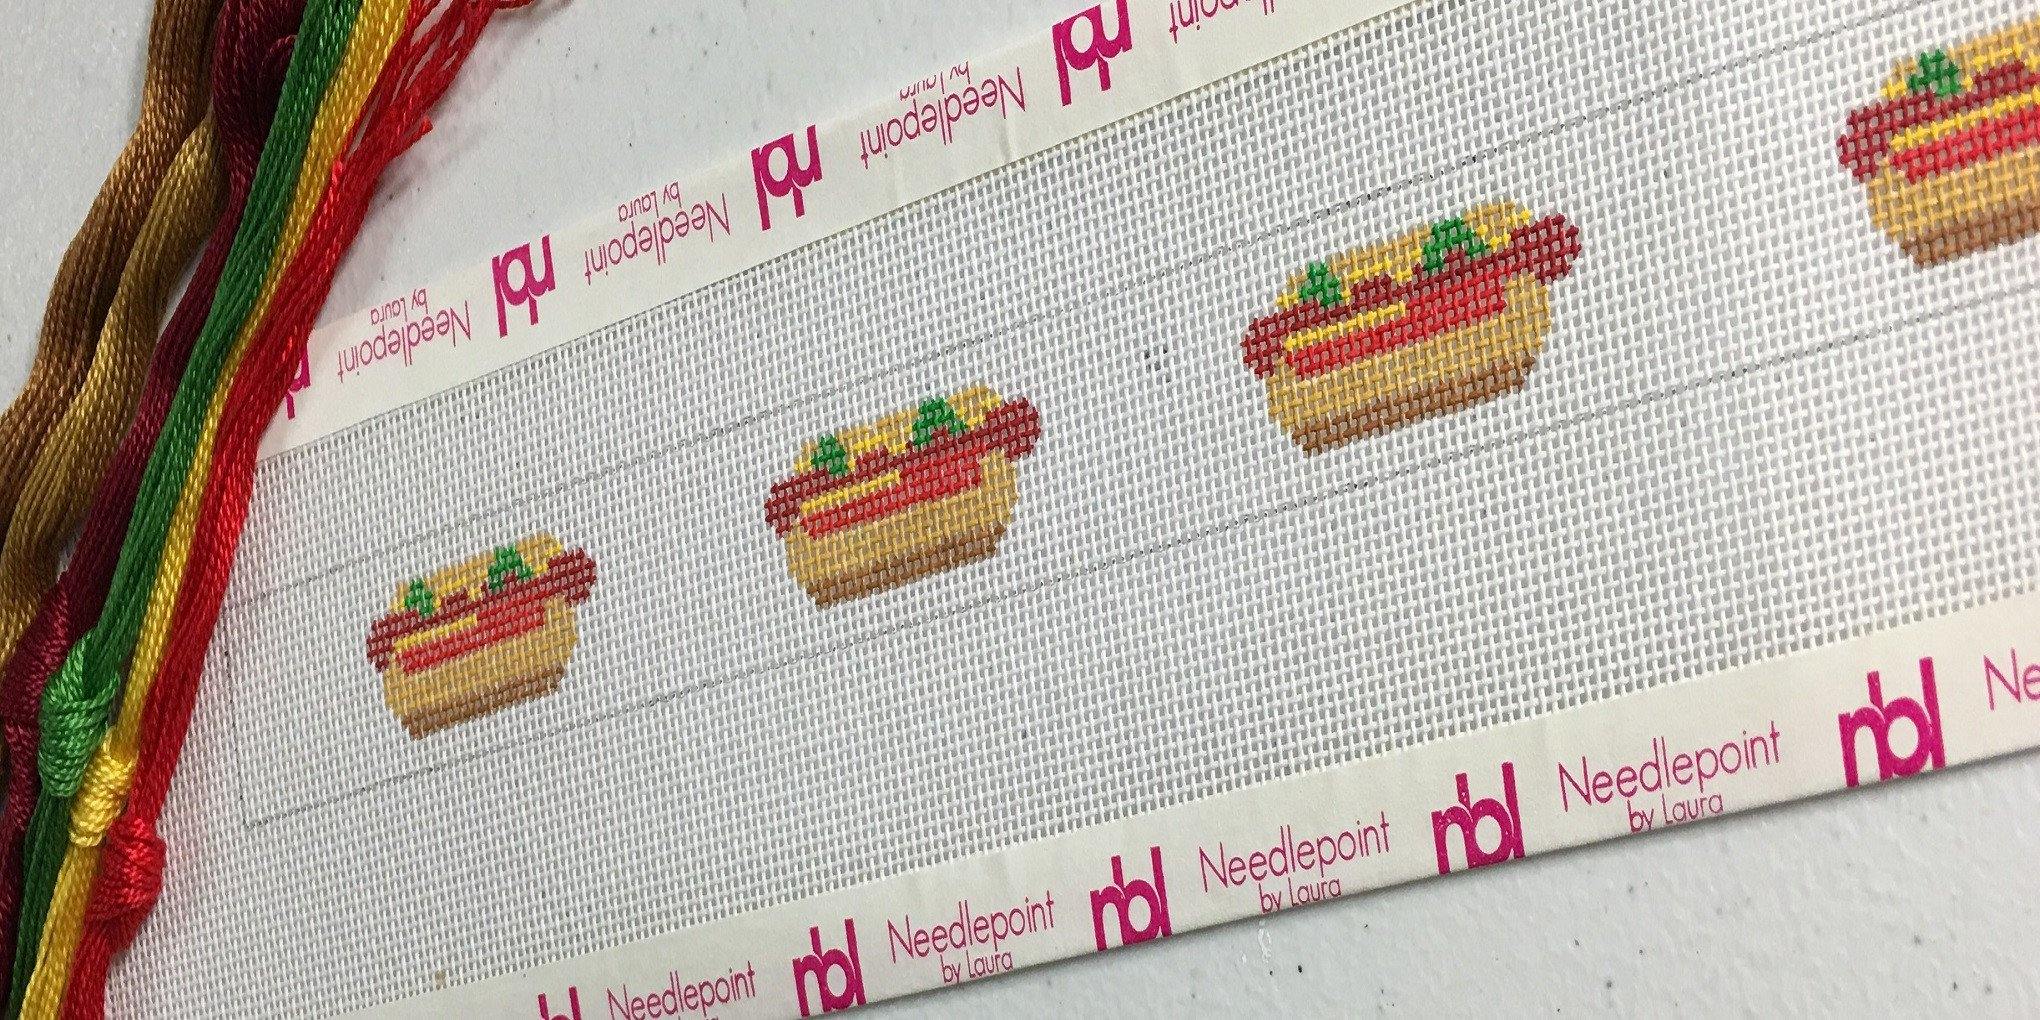 Hot dog needlepoint dog collar canvas - Needlepoint by Laura